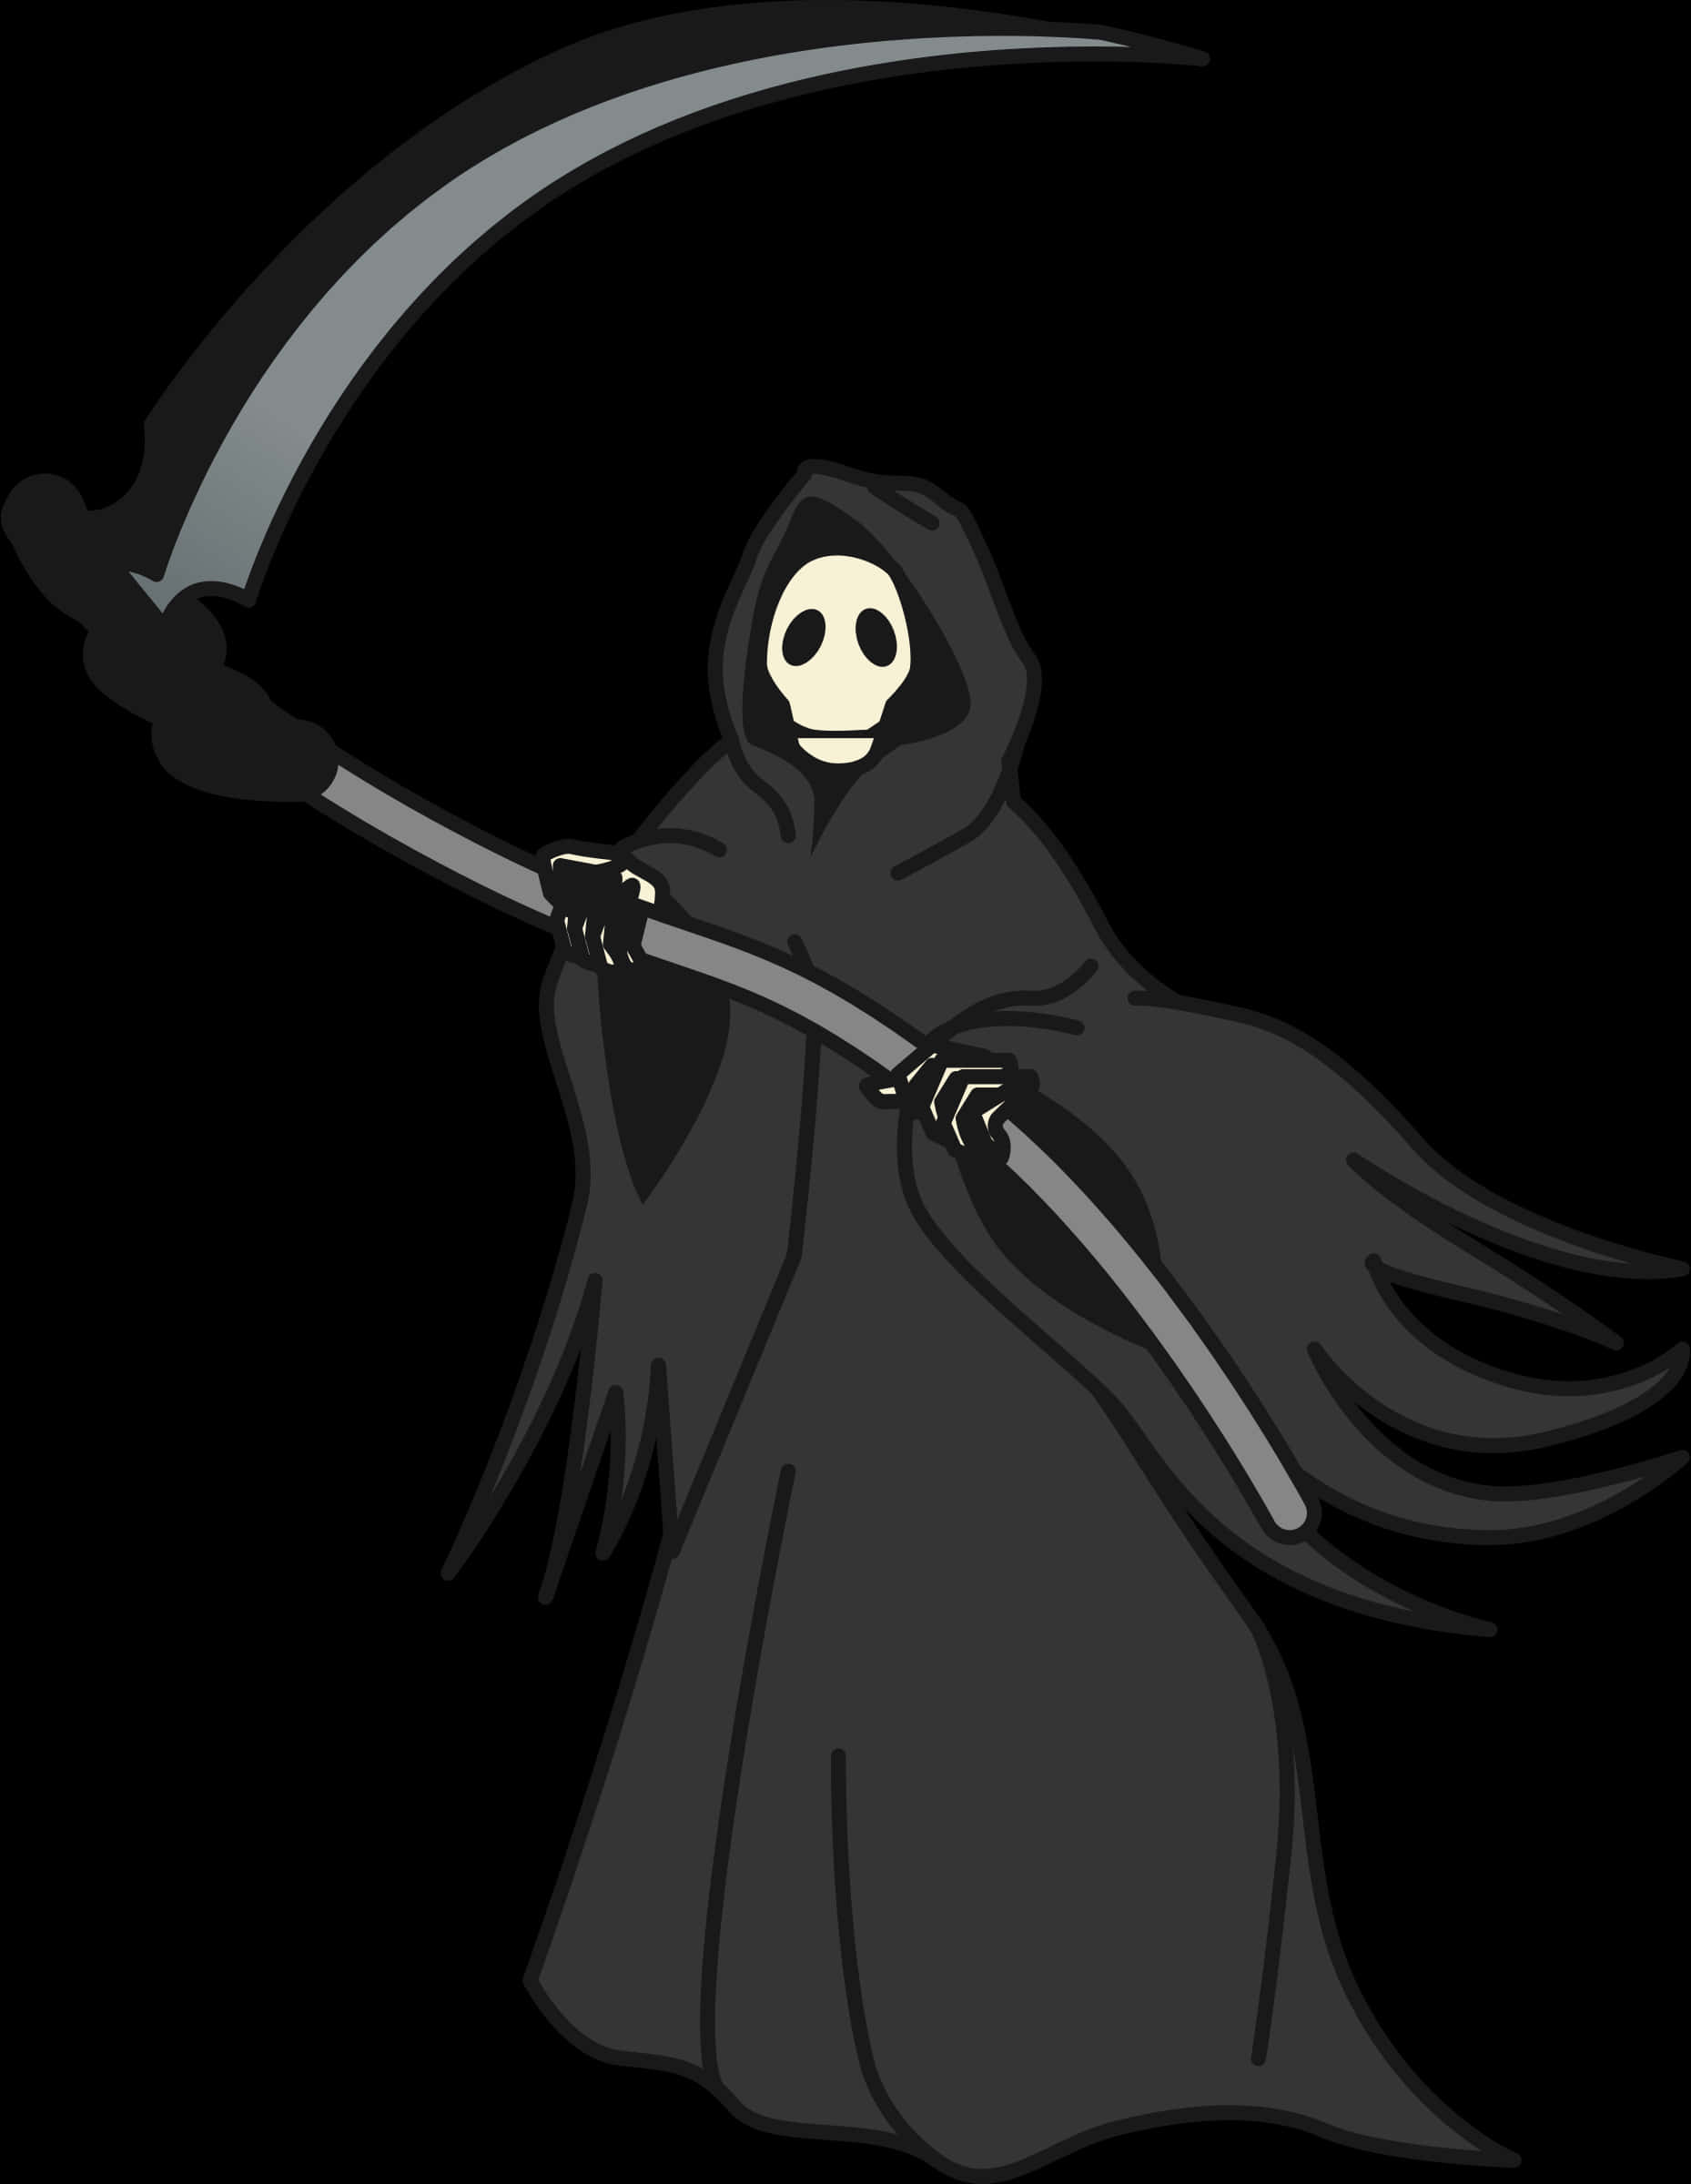 Grim Reaper Cartoon Illustration PNG image